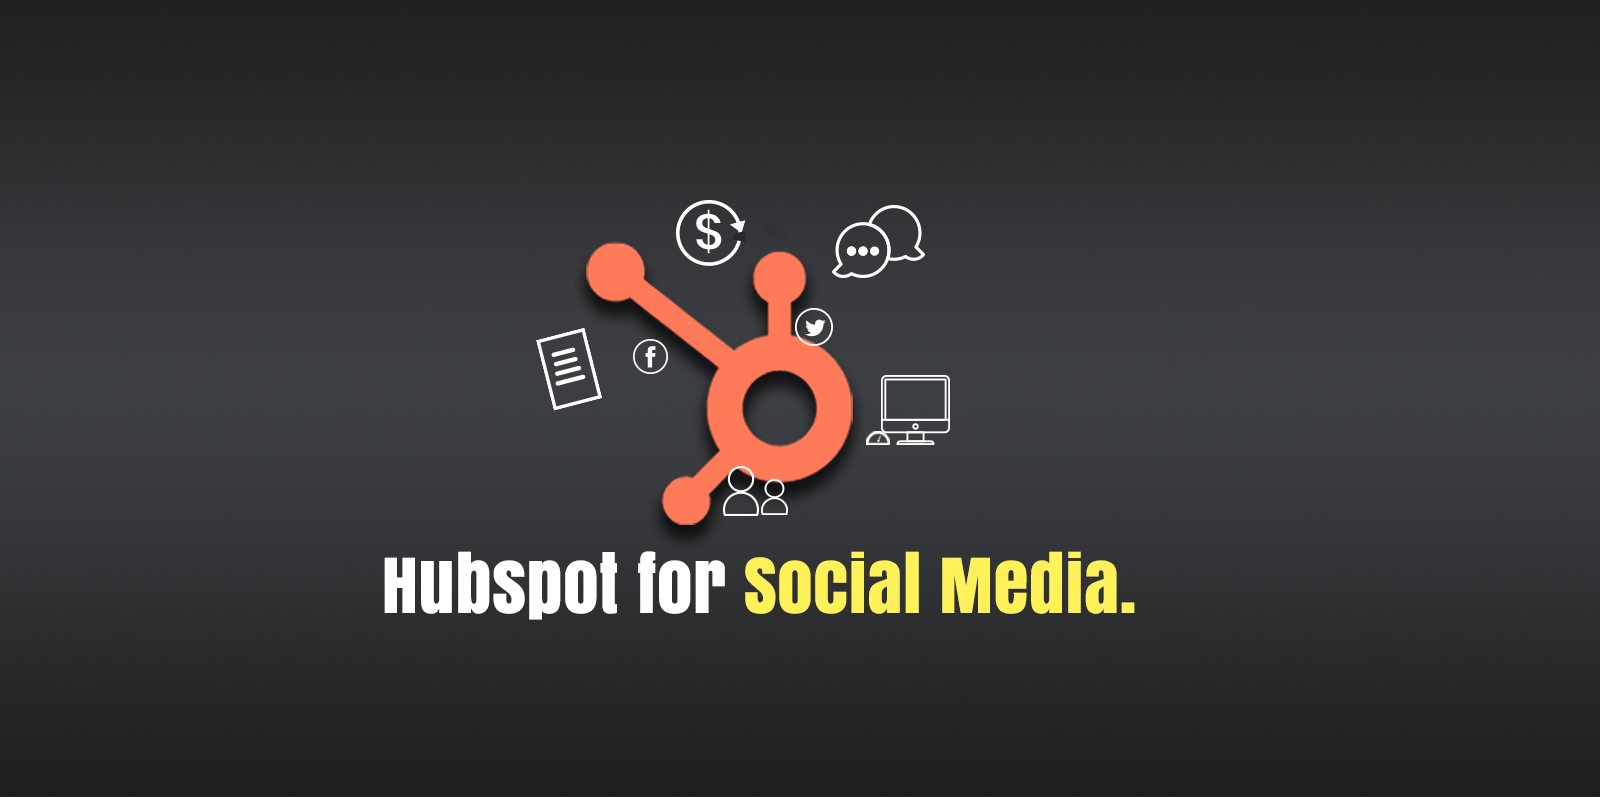 6 Benefits of using HubSpot for social media management